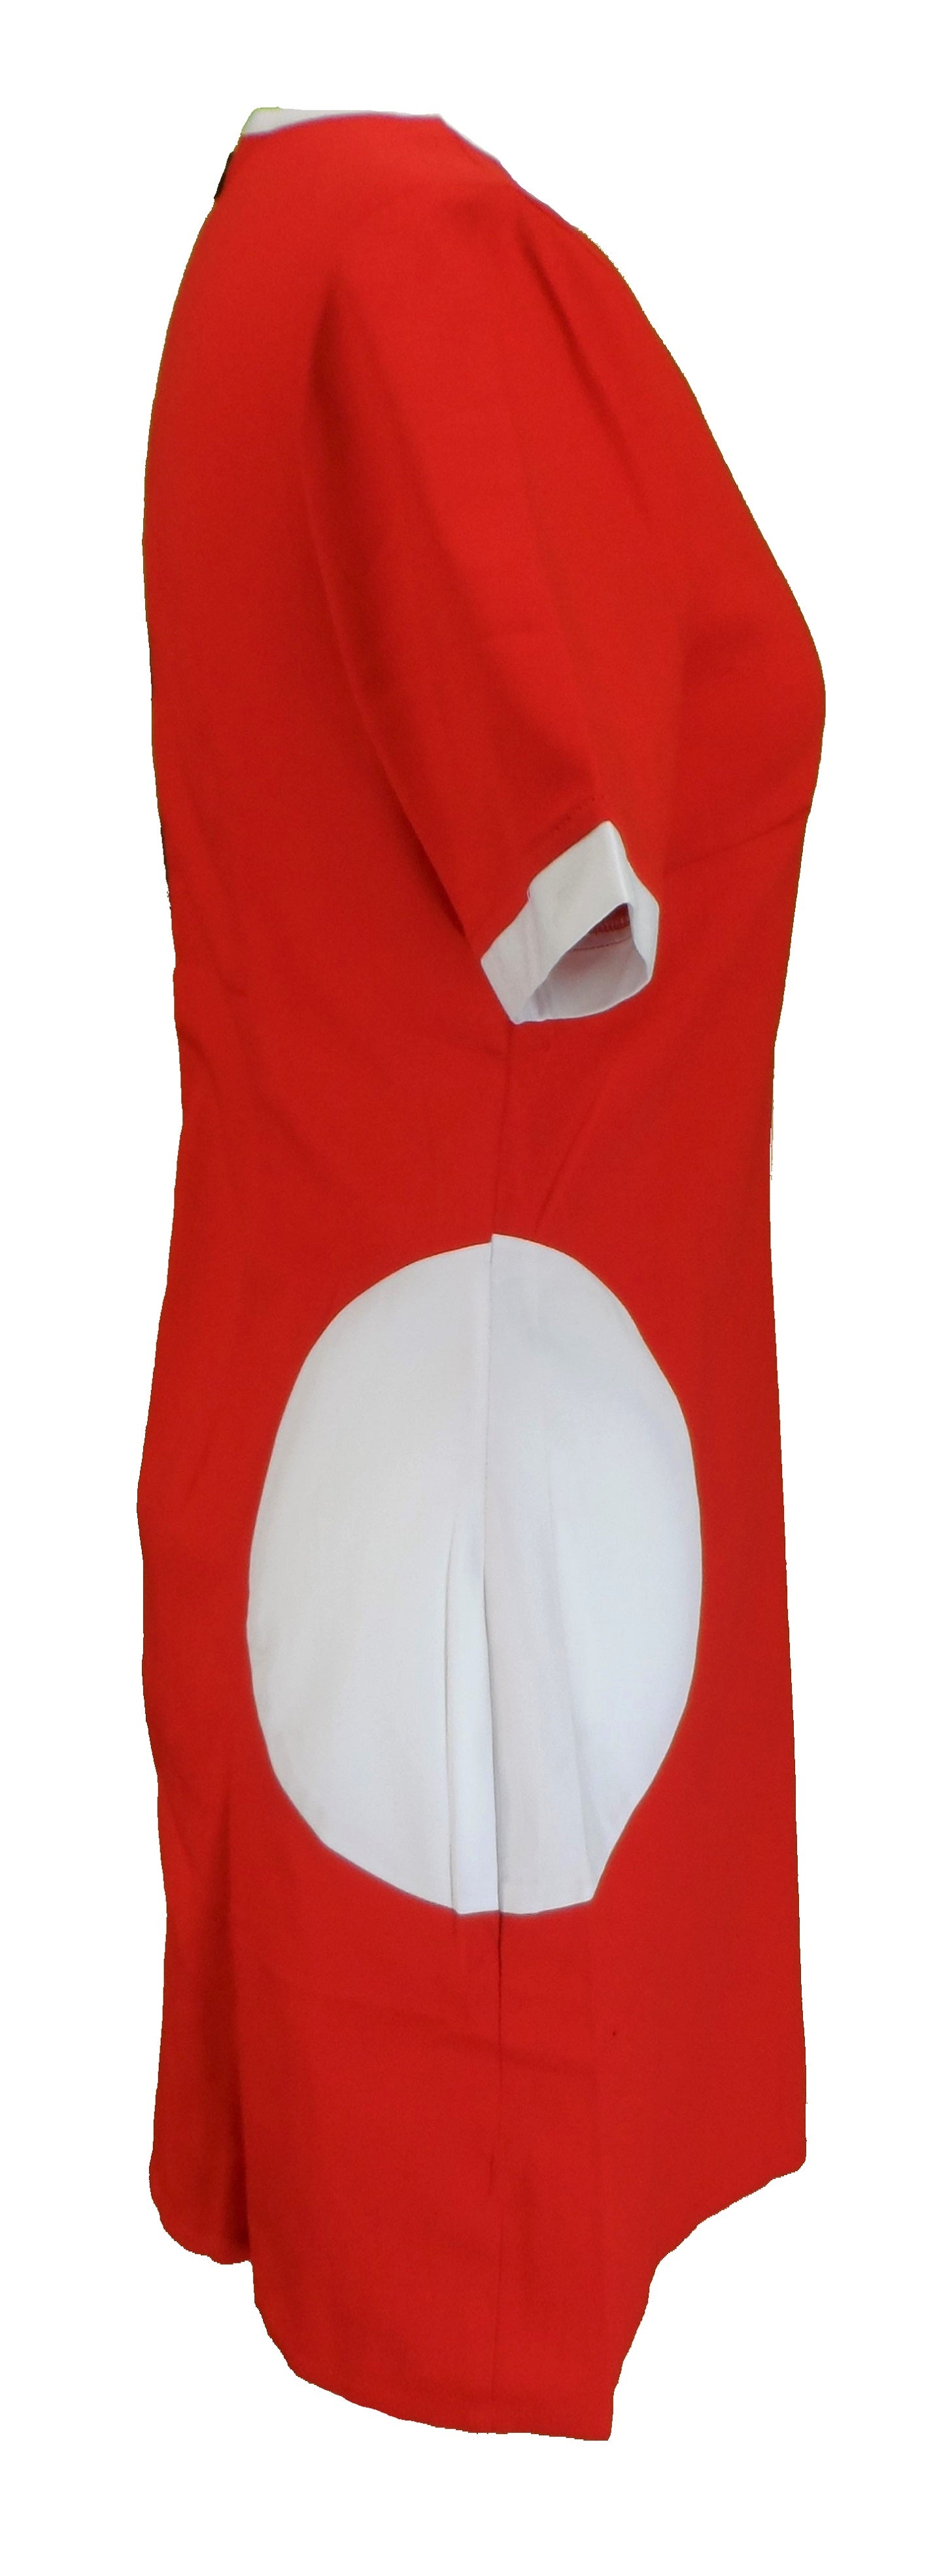 Ladies Retro Mod Vintage Red White and Blue Dress